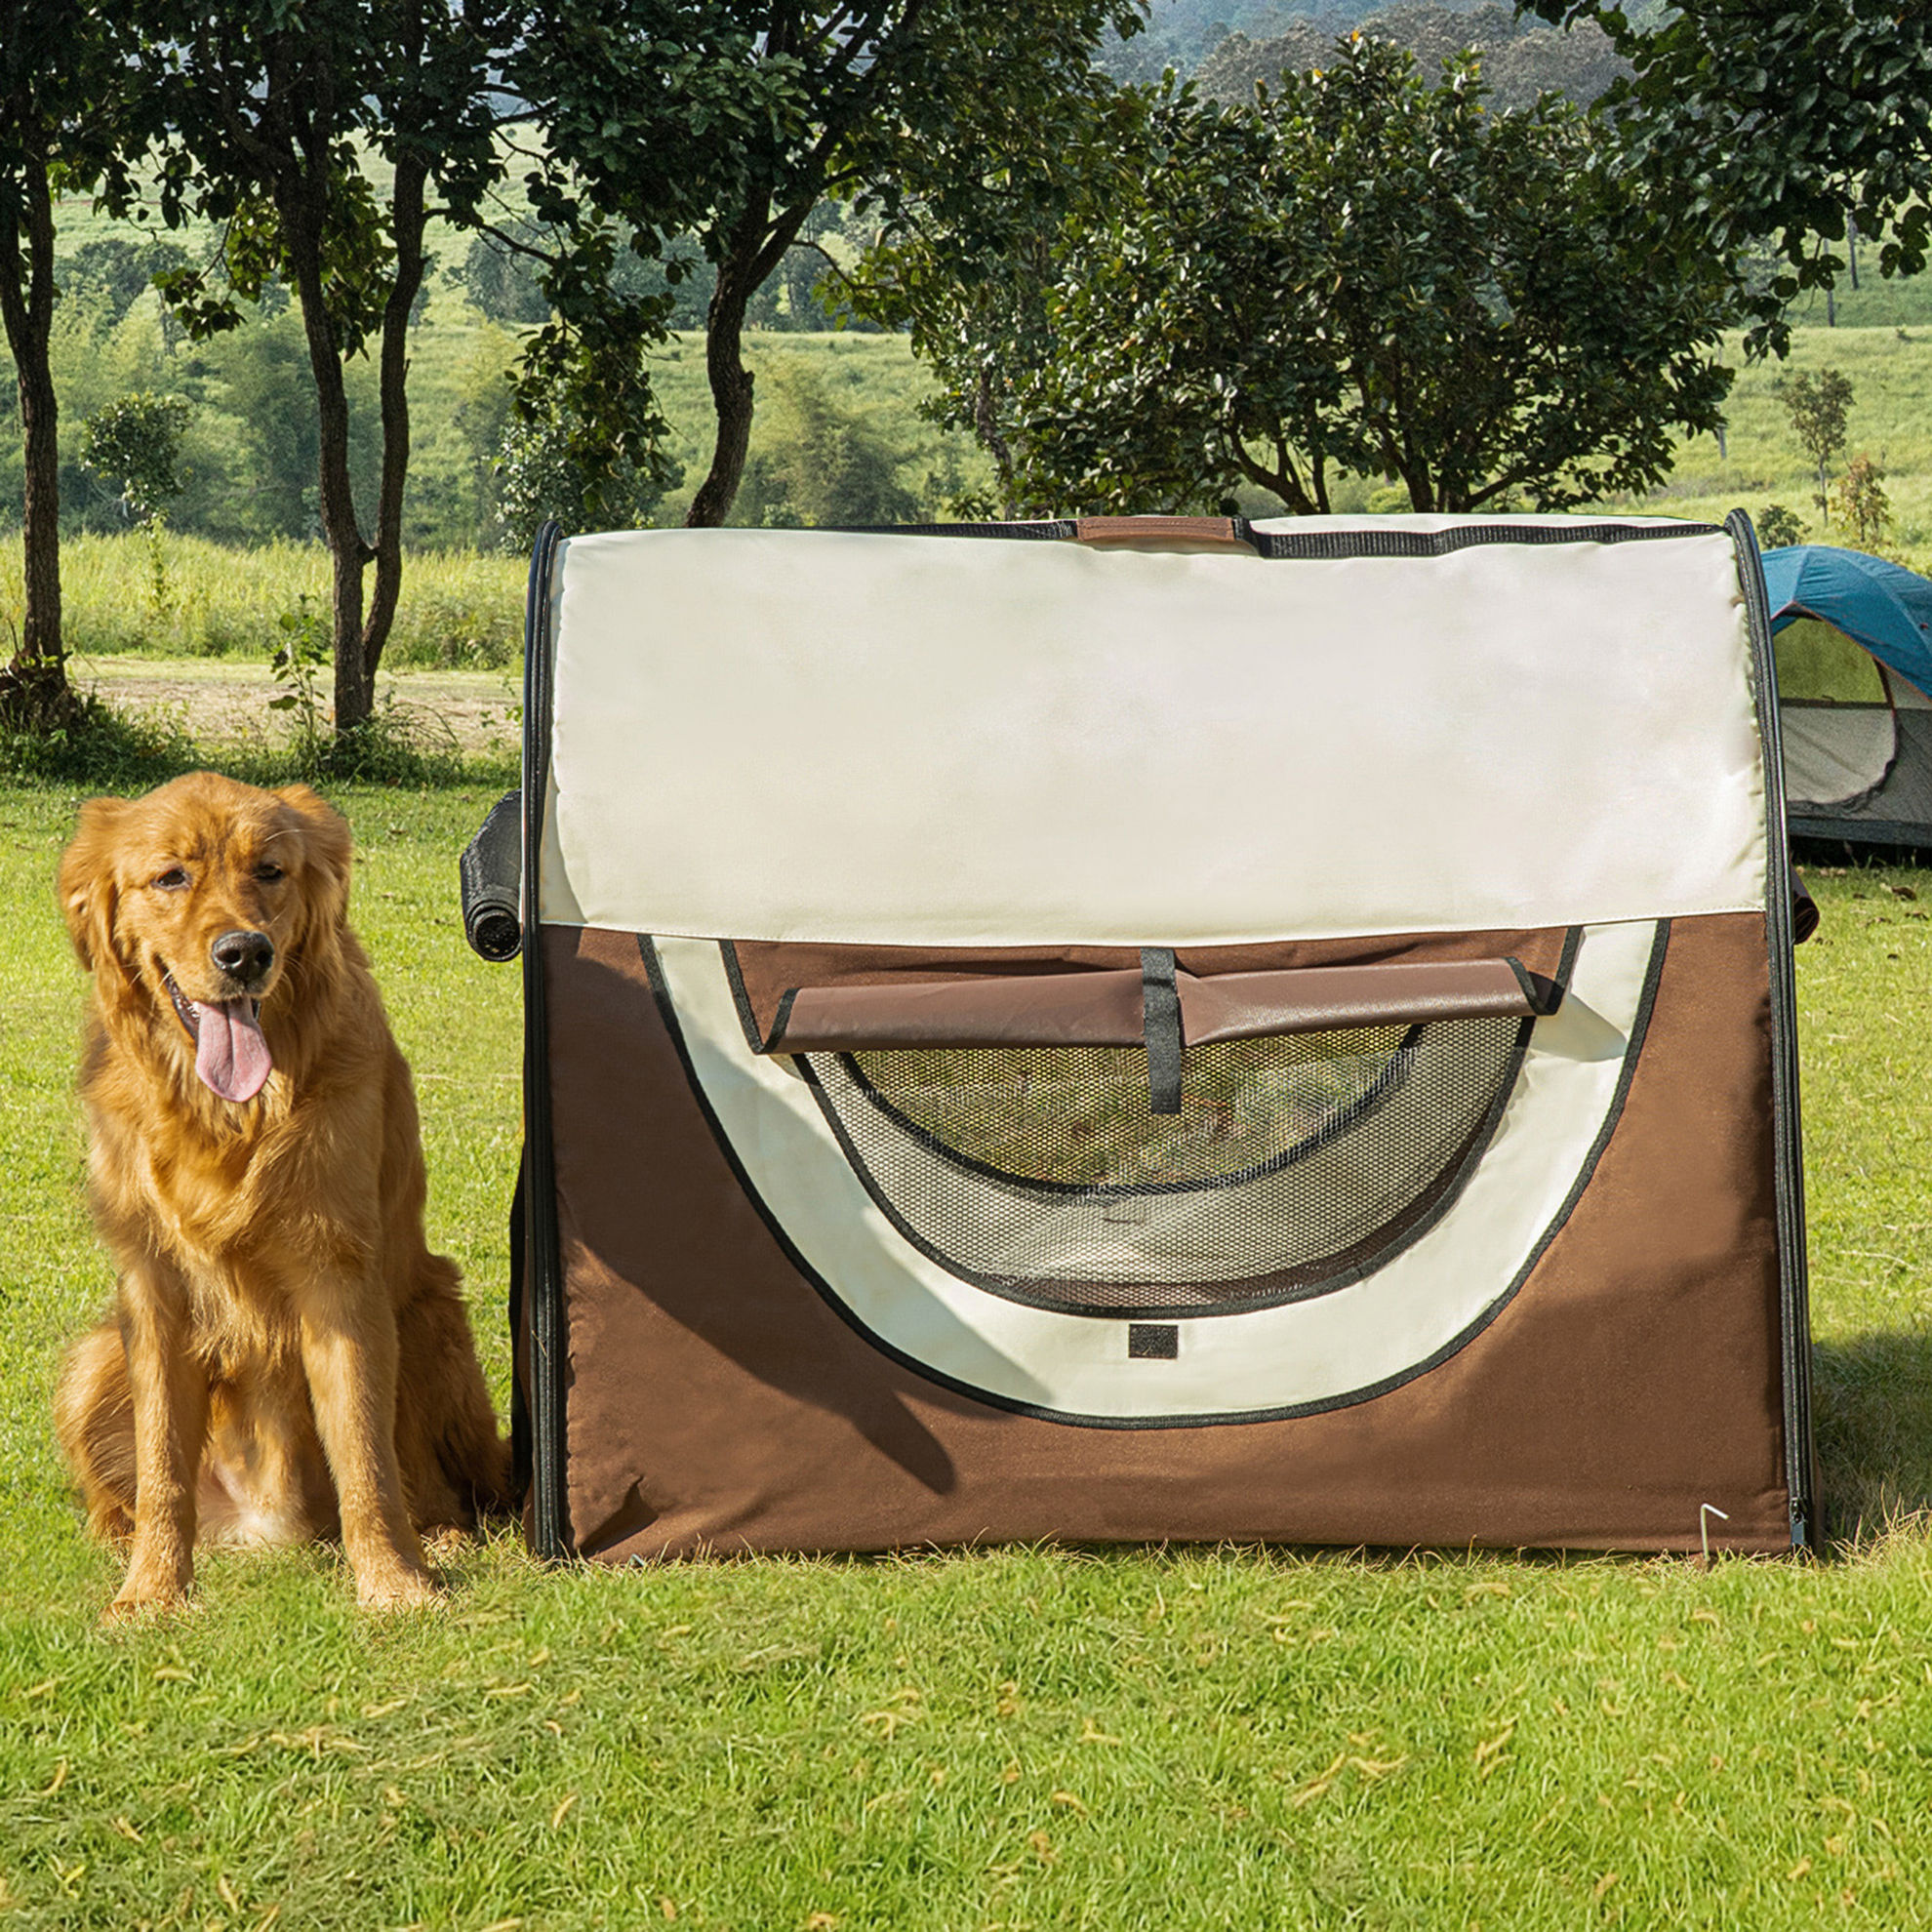 Hundetransportbox in Größe XXL Farbe: kaffeebraun, creme | Weltbild.de